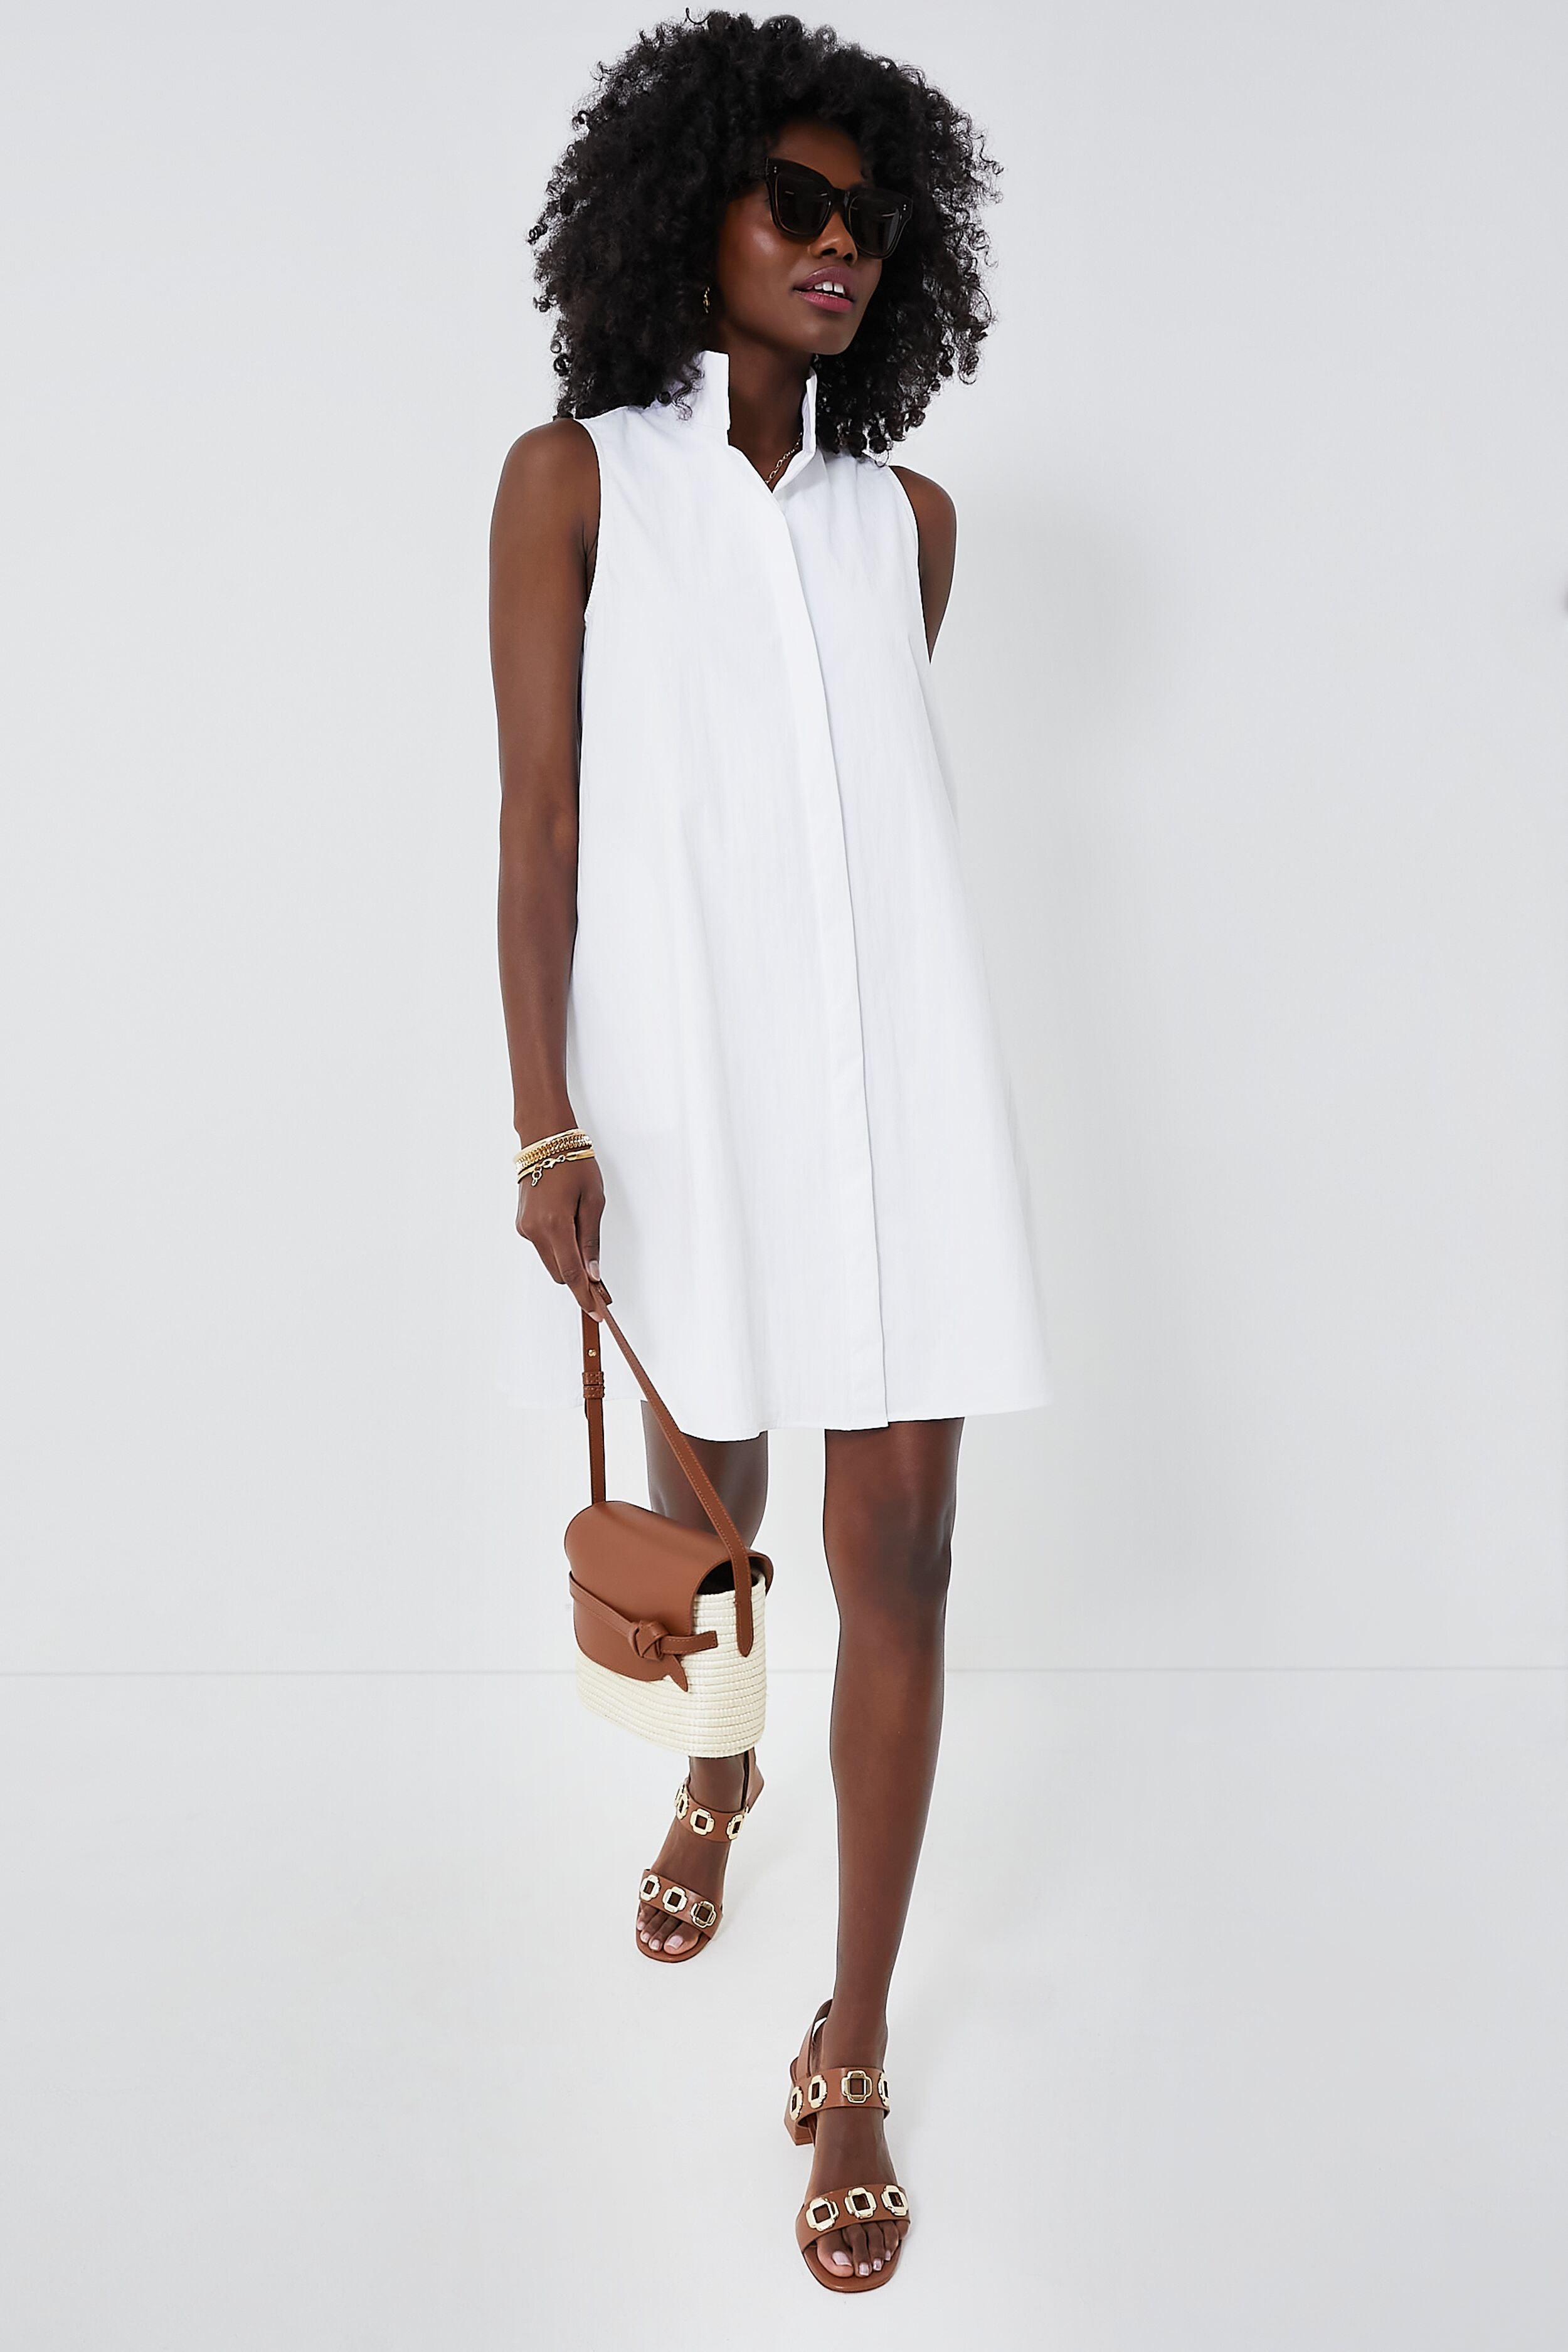 Spotted: Designer Dress Look-A-Like (Under $100)